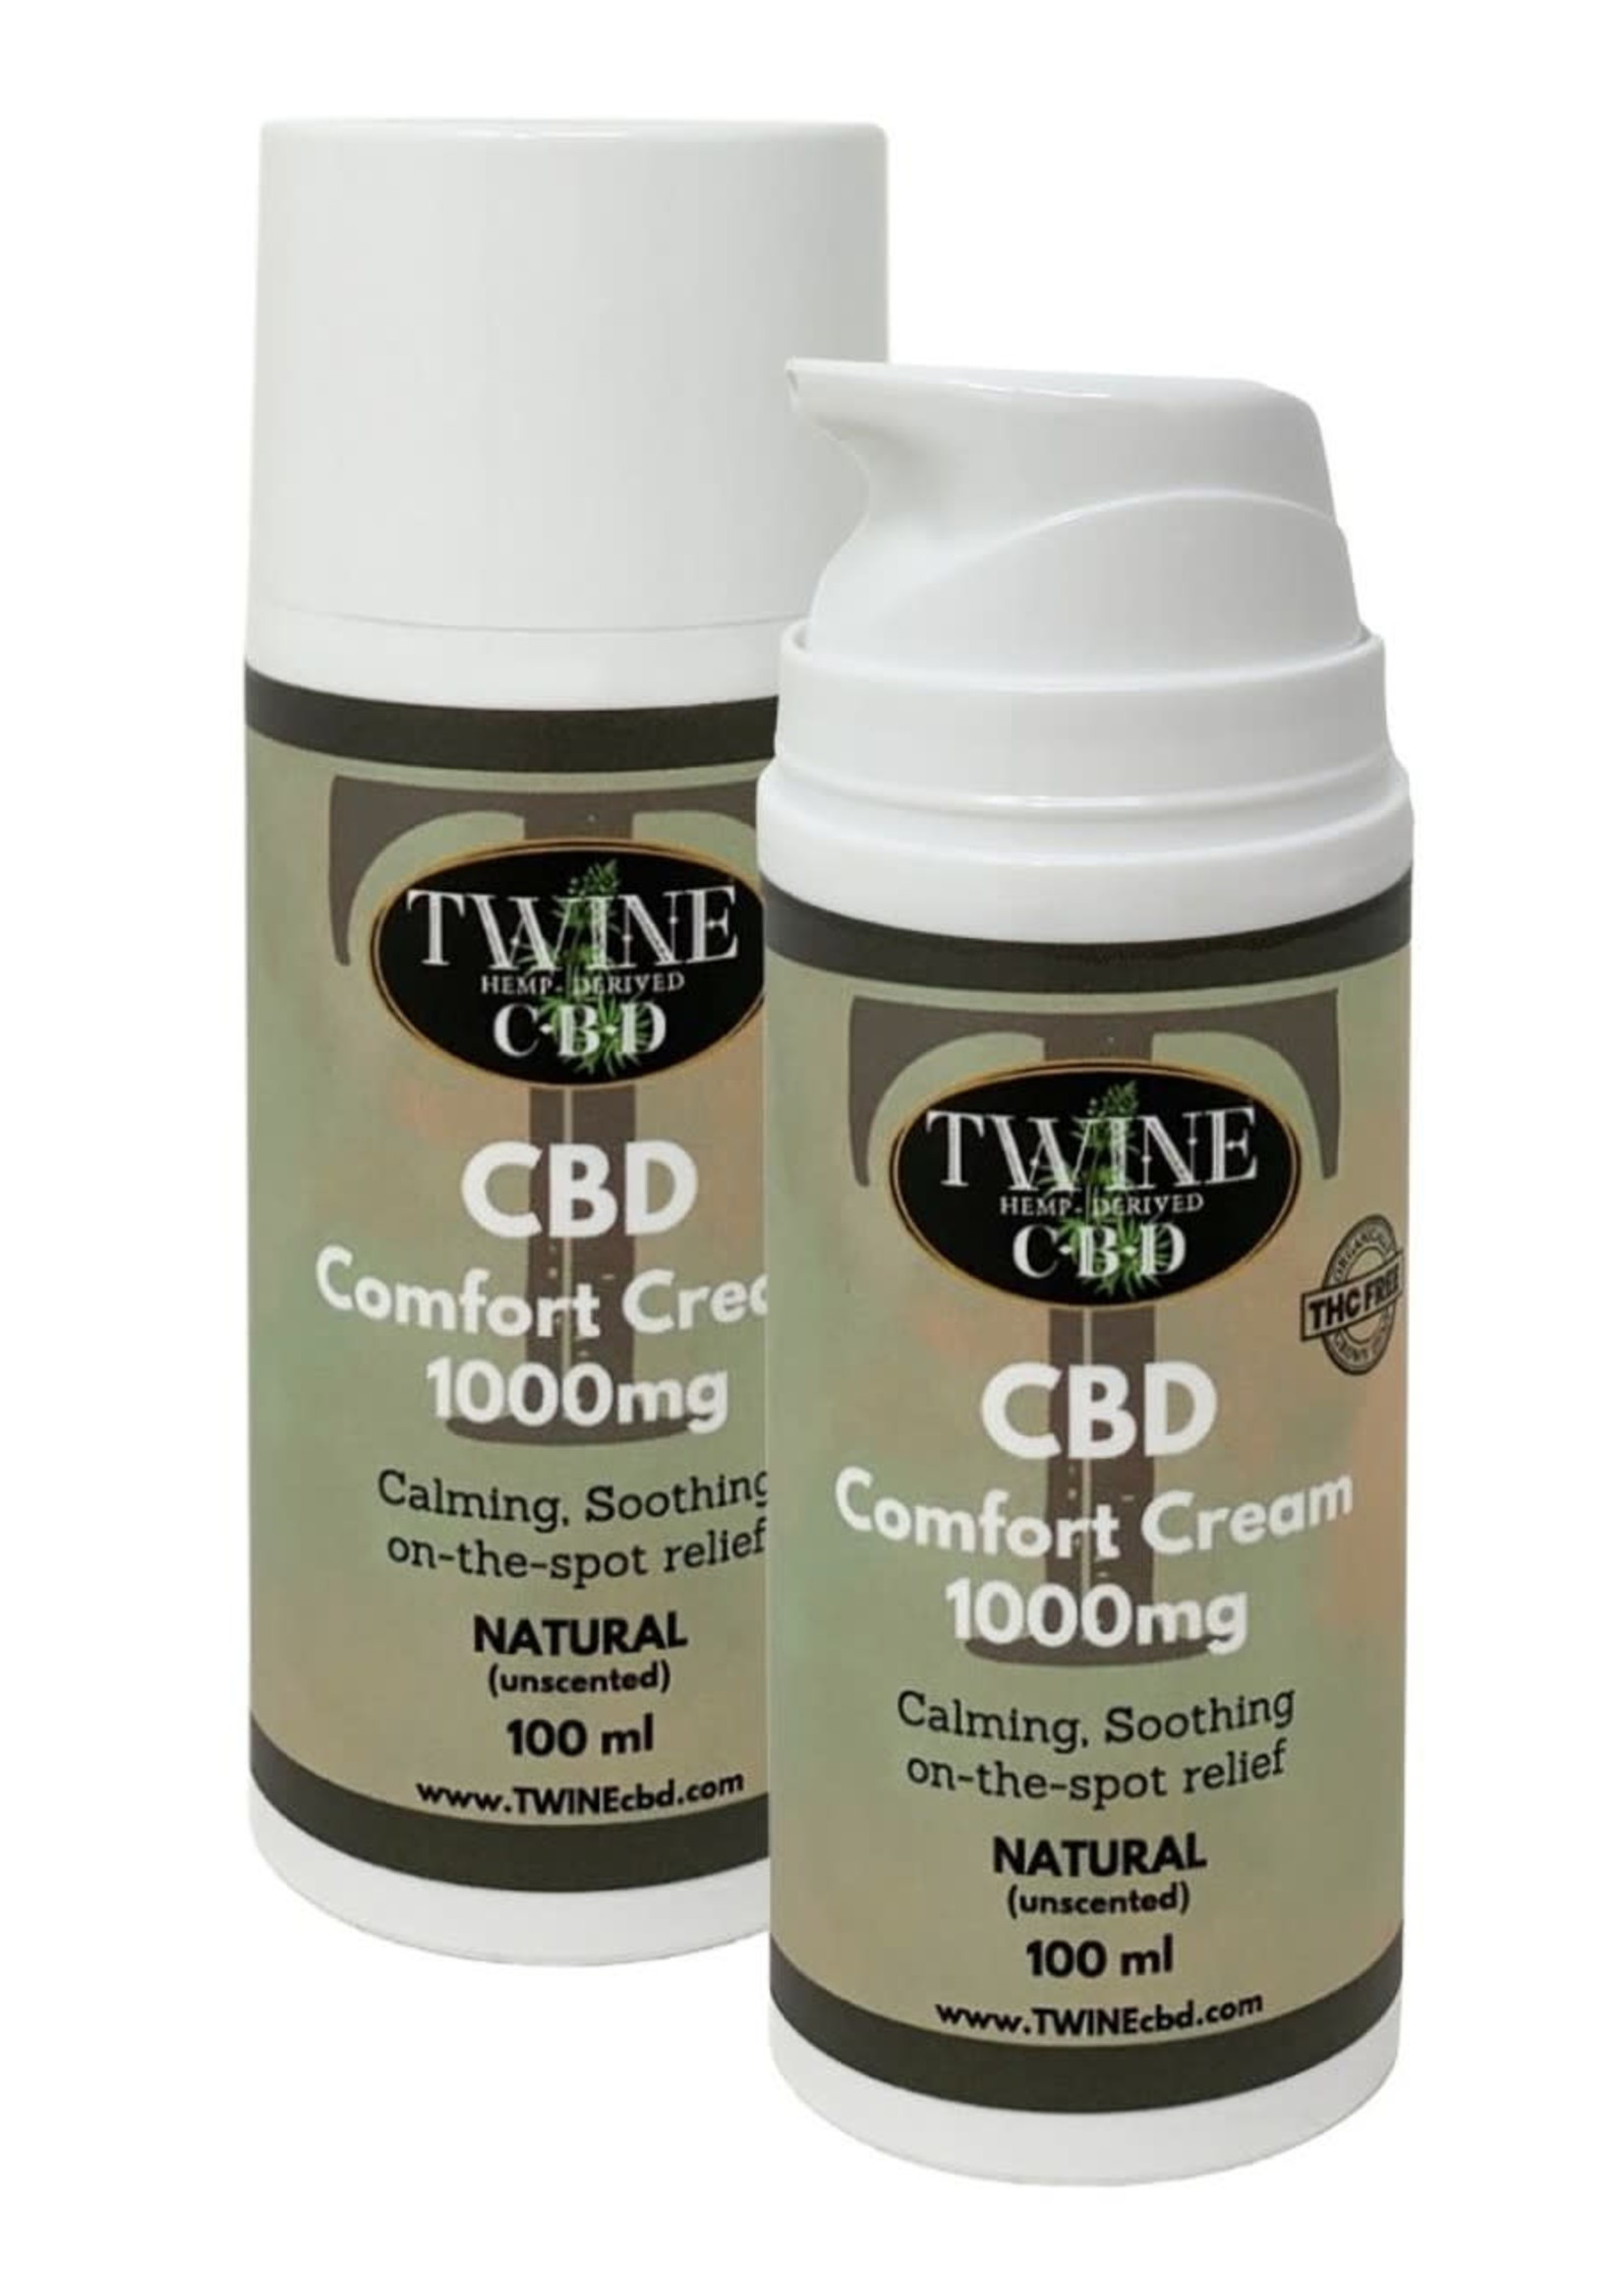 Twine 1000MG Natural CBD Cream